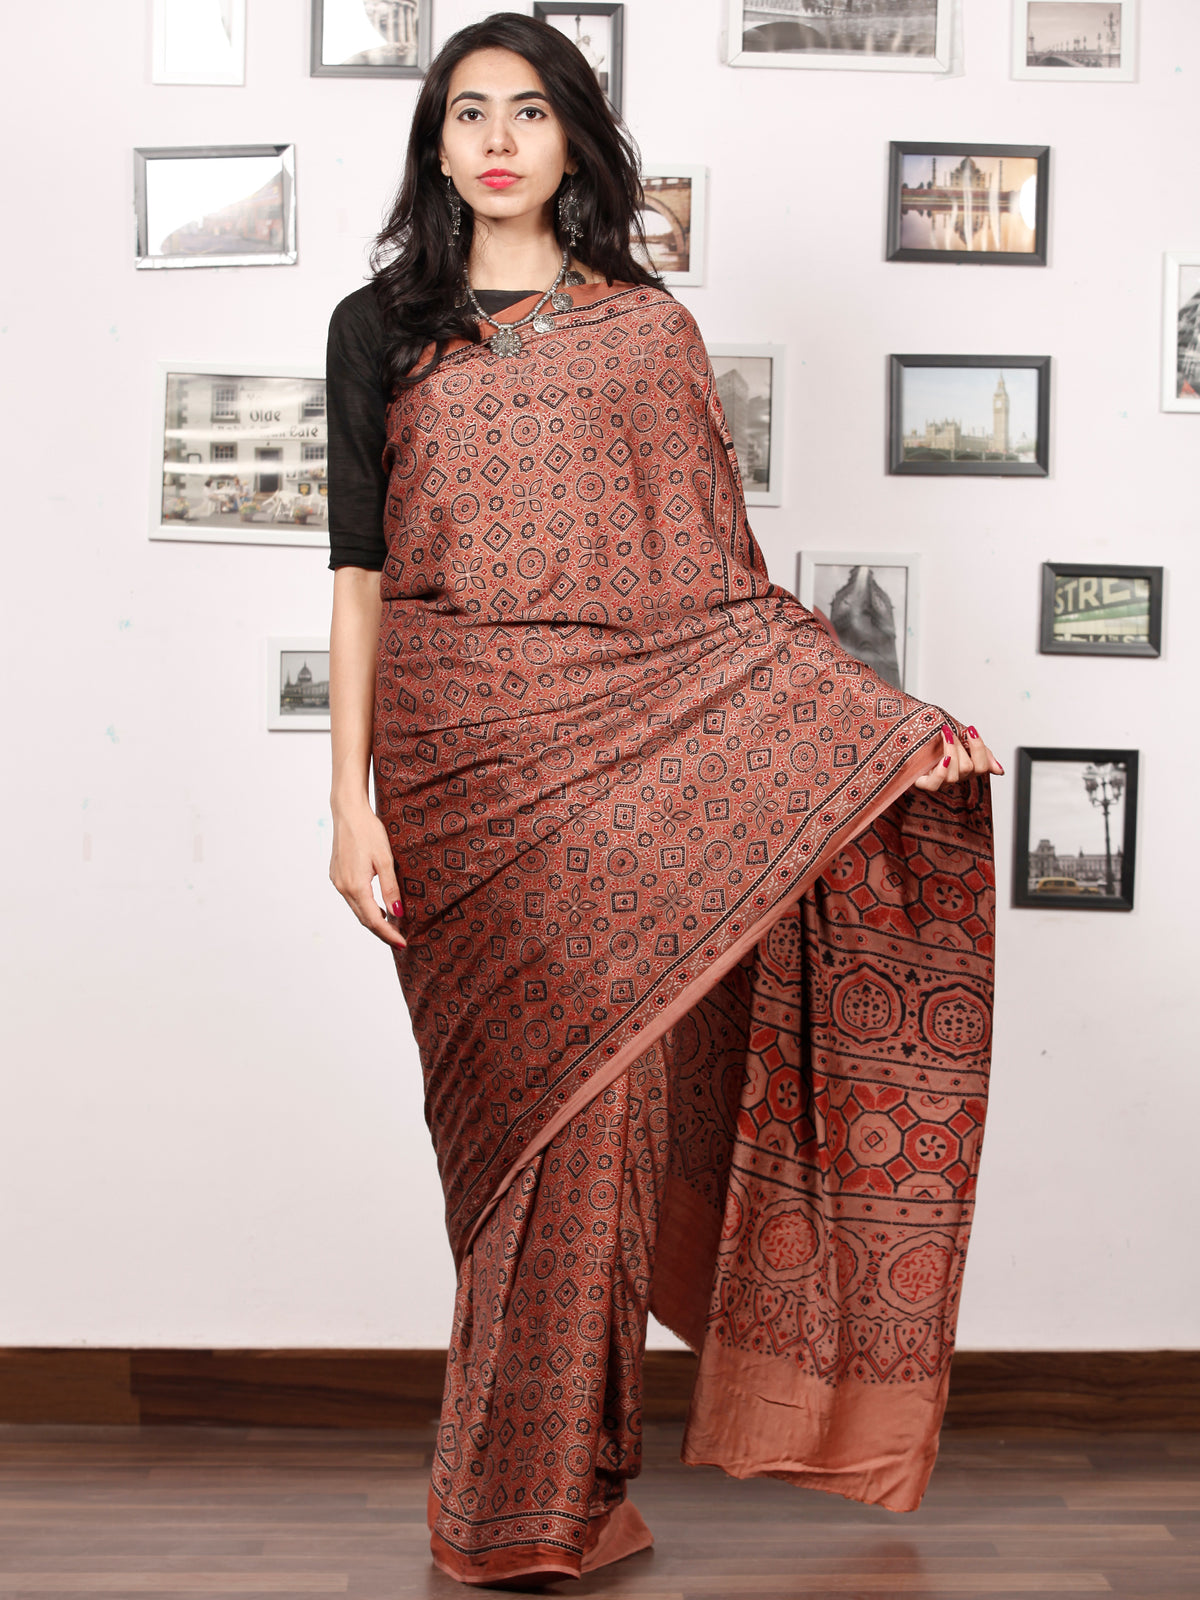 Rust Red Black Ajrakh Hand Block Printed Modal Silk Saree in Natural Colors - S031703378